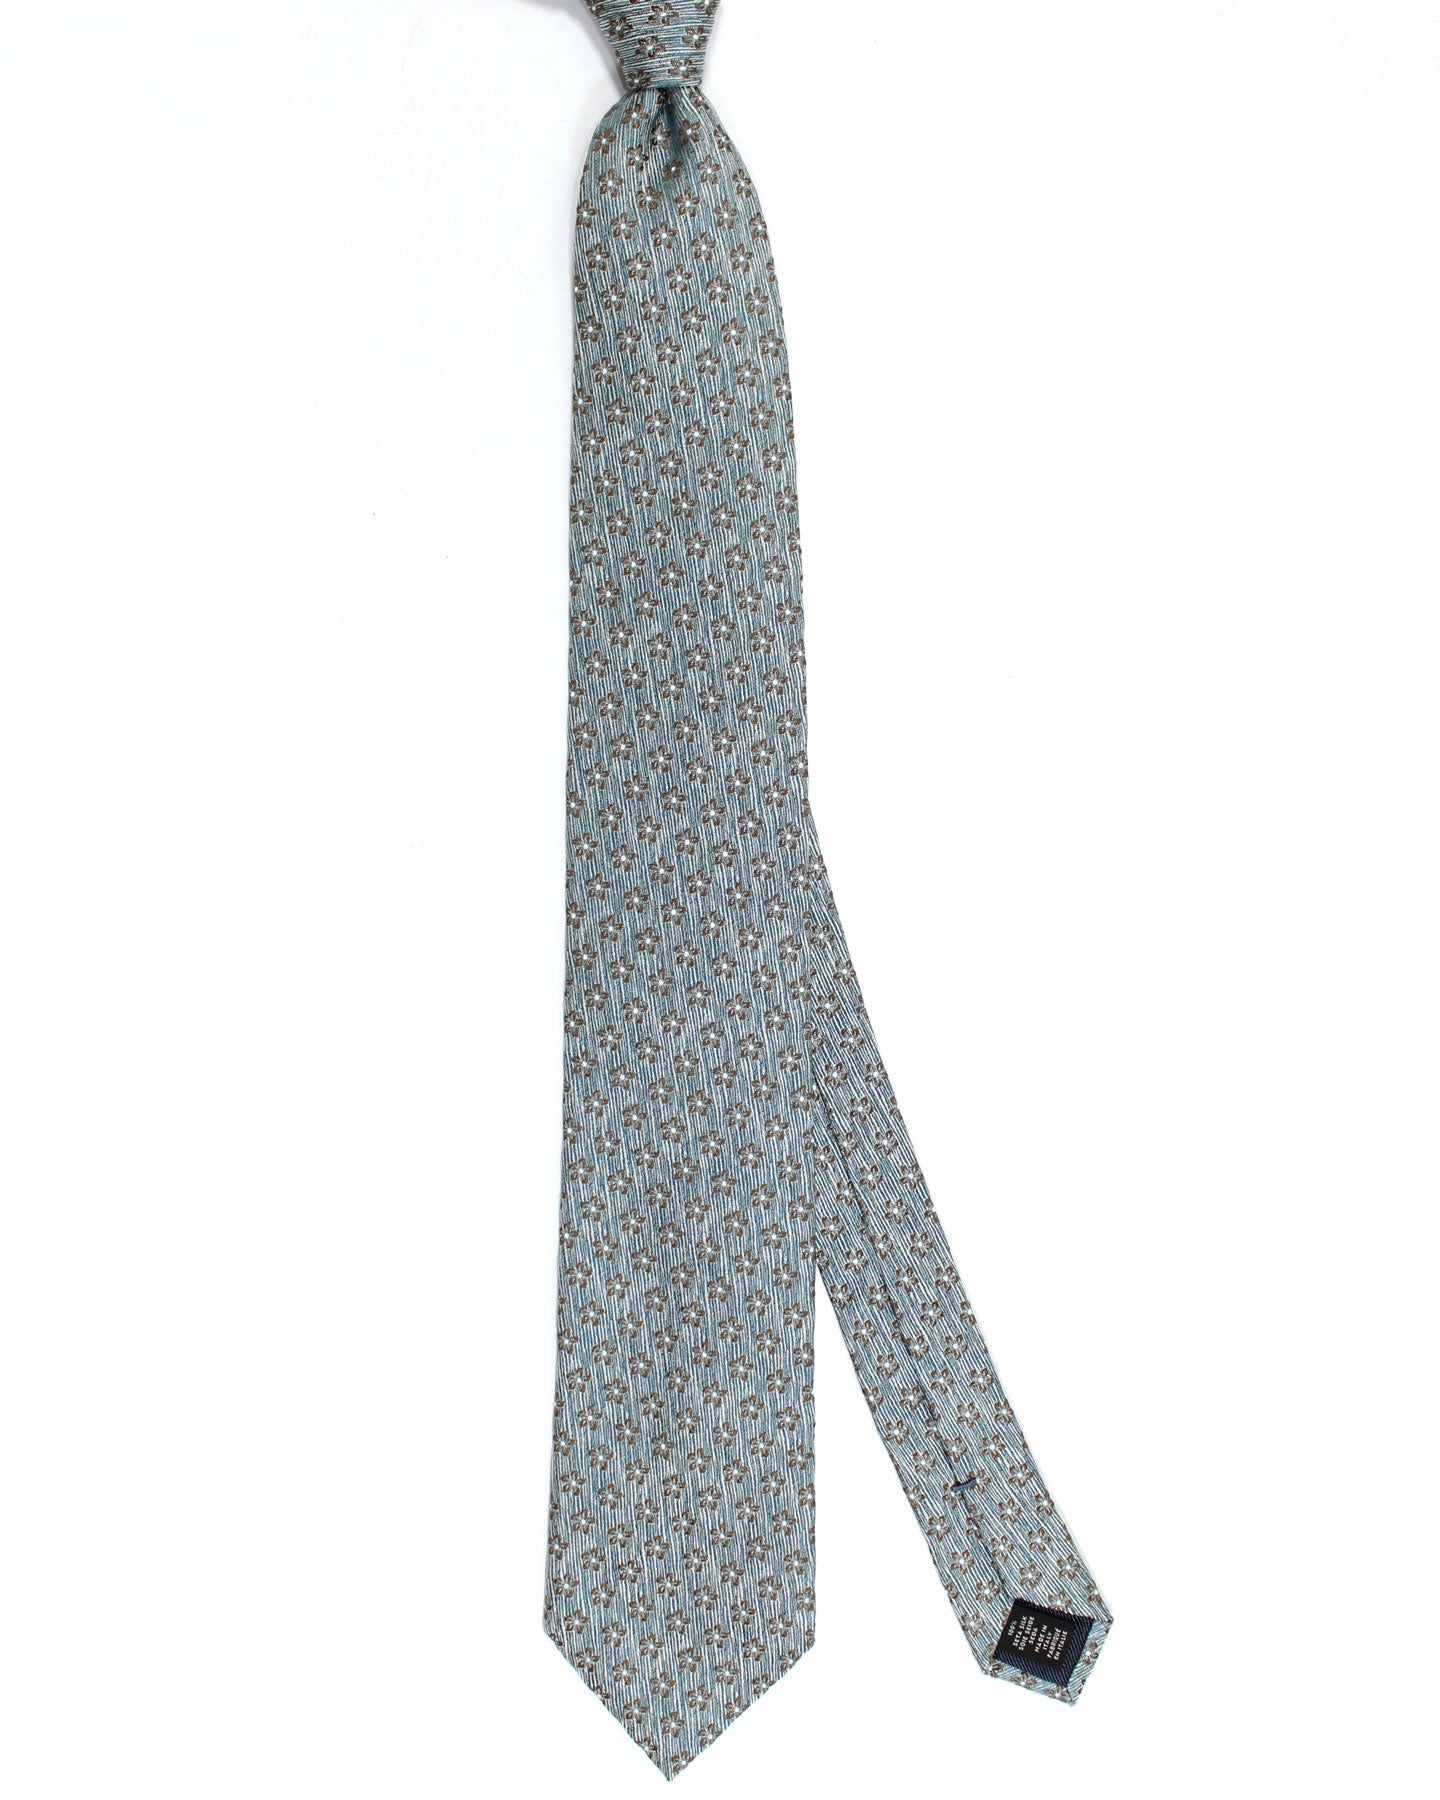 Ermenegildo Zegna Silk Tie Gray Brown Floral - Hand Made in Italy